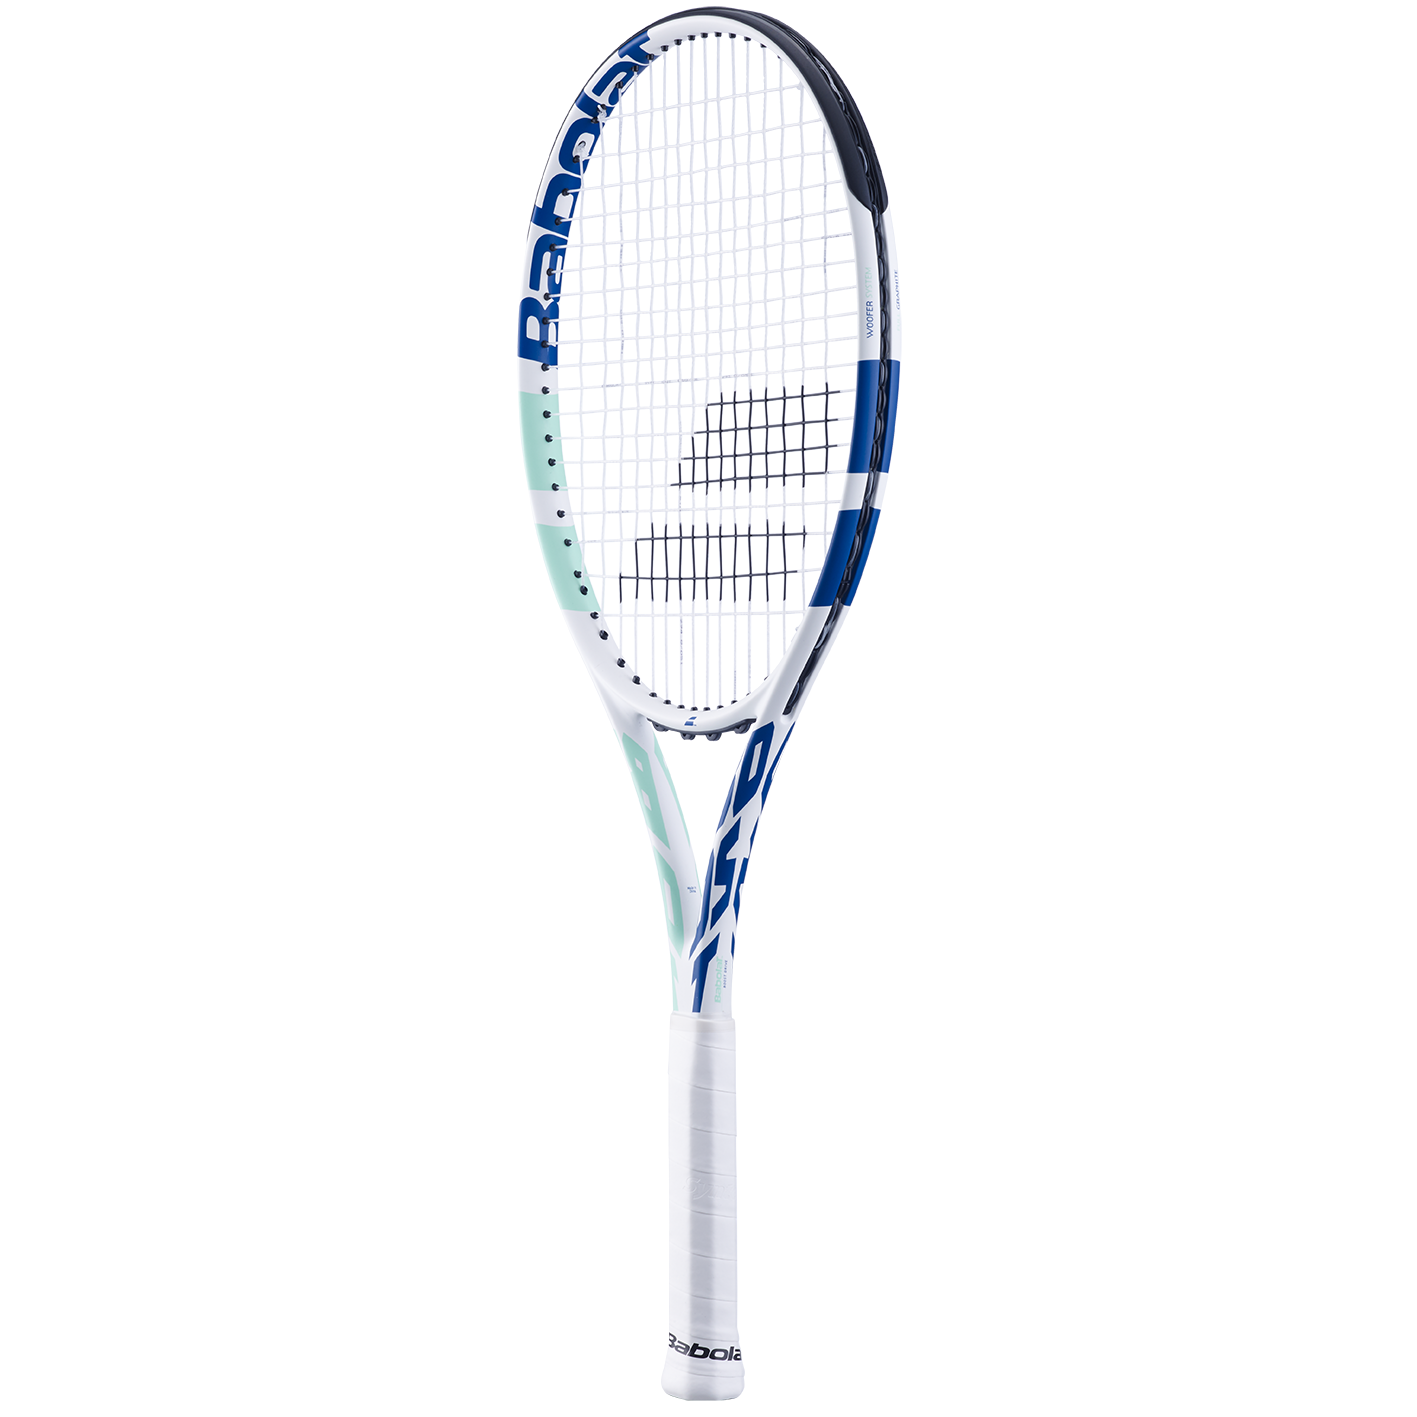 Babolat Boost Drive Womens Tennis Racket - White/Blue